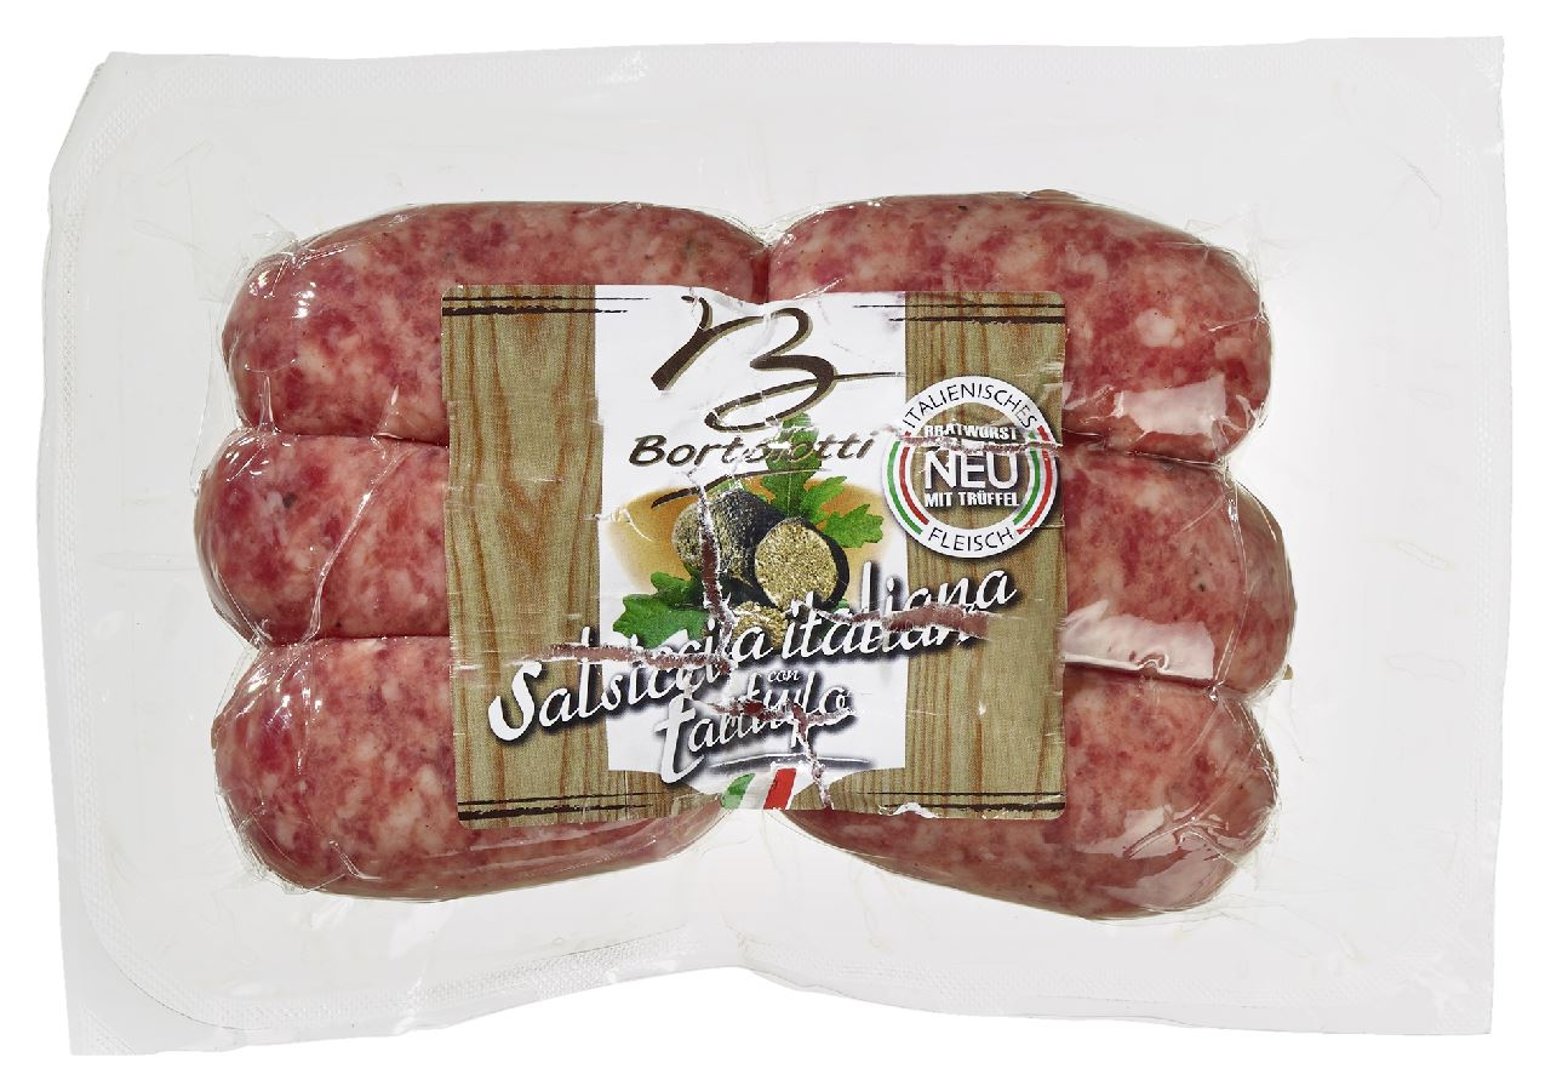 Bortolotti - Salsiccia italiana con tartufo gekühlt vak.-verpackt - 300 g Packung